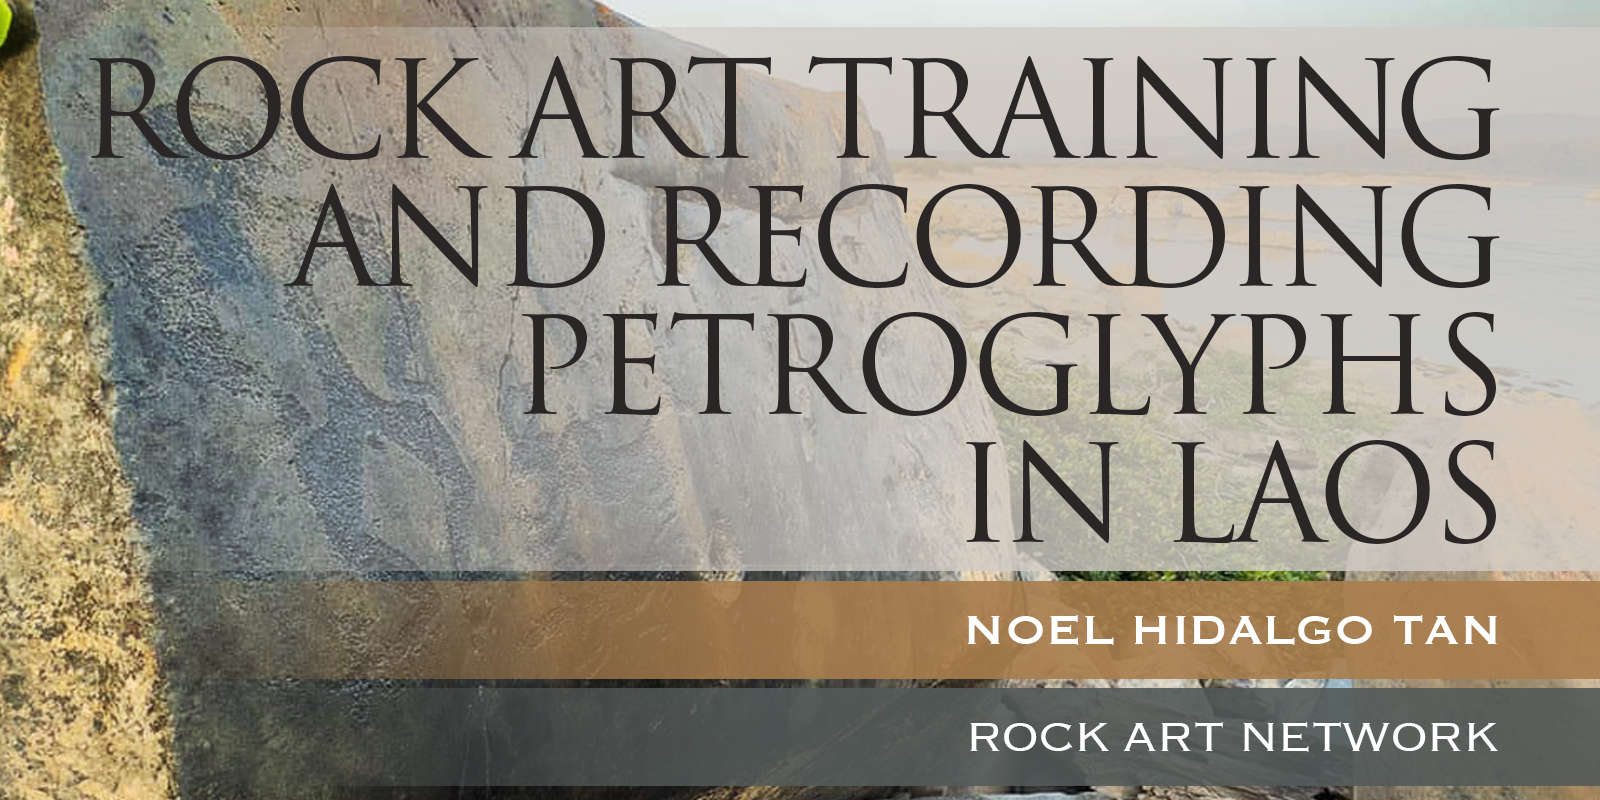 Rock Art Network Rock Art Training and Recording Petroglyphs in Laos